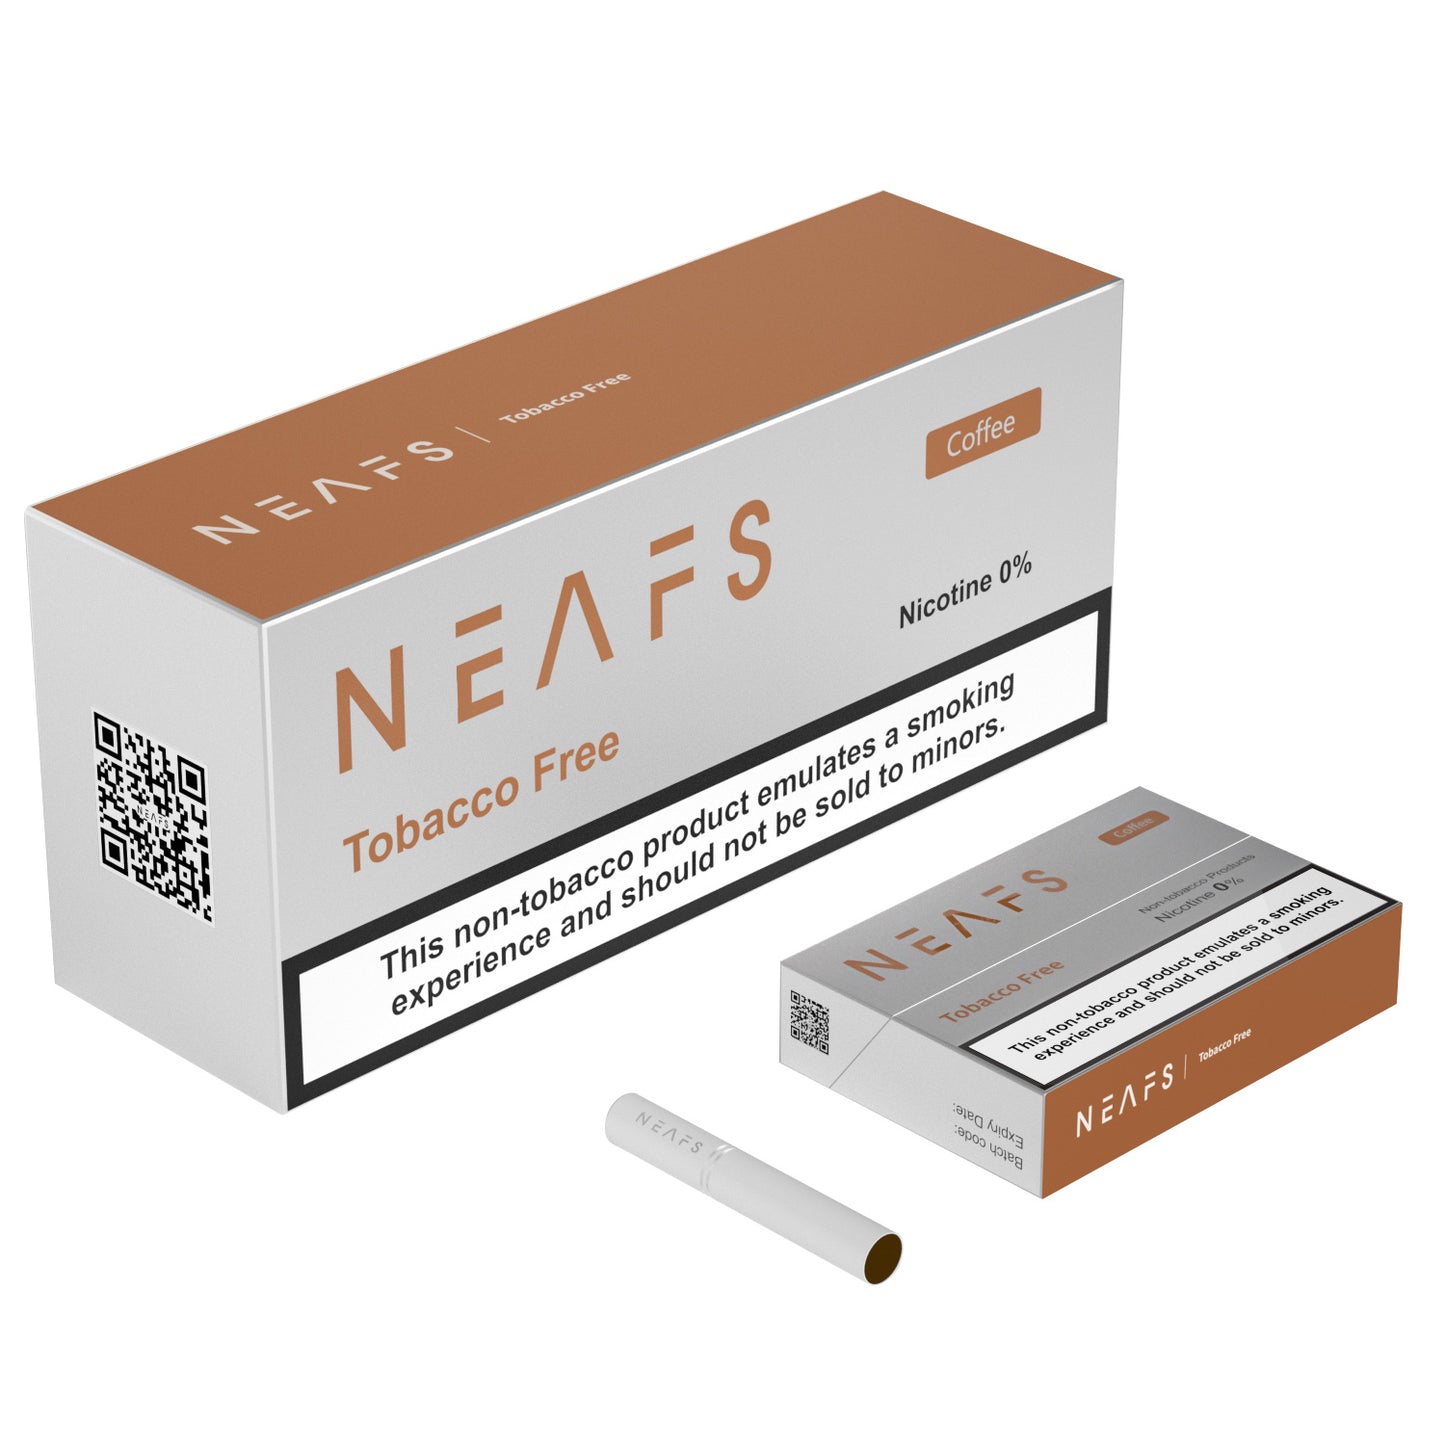 NEAFS Coffee Tobacco Free Heated Sticks